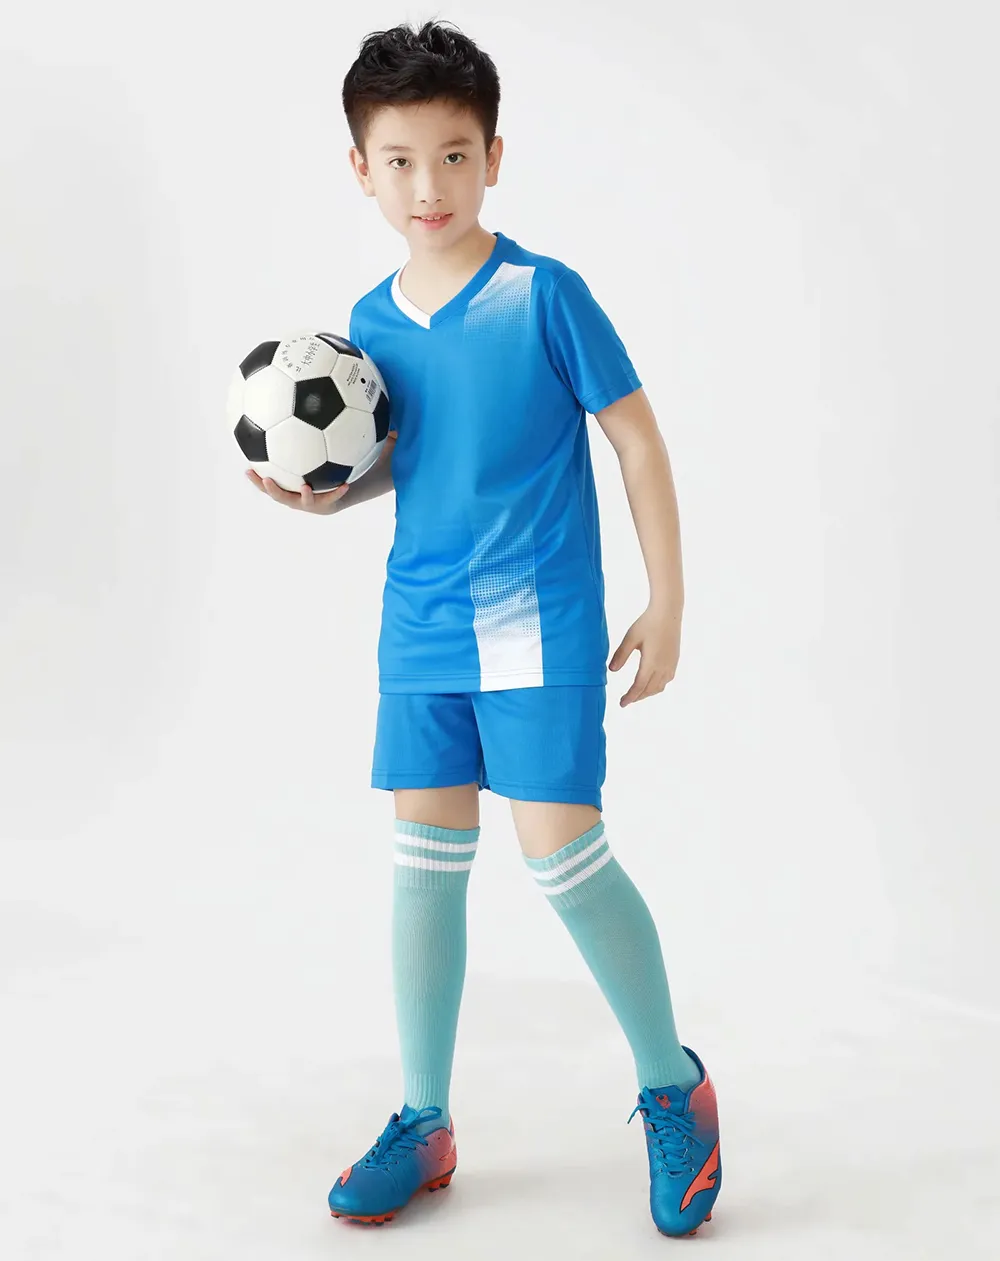 Jessie_kicks #G461 LJR aiir joordan 5 Design 2021 Moda Camisolas Roupas Infantis Ourtdoor Sport